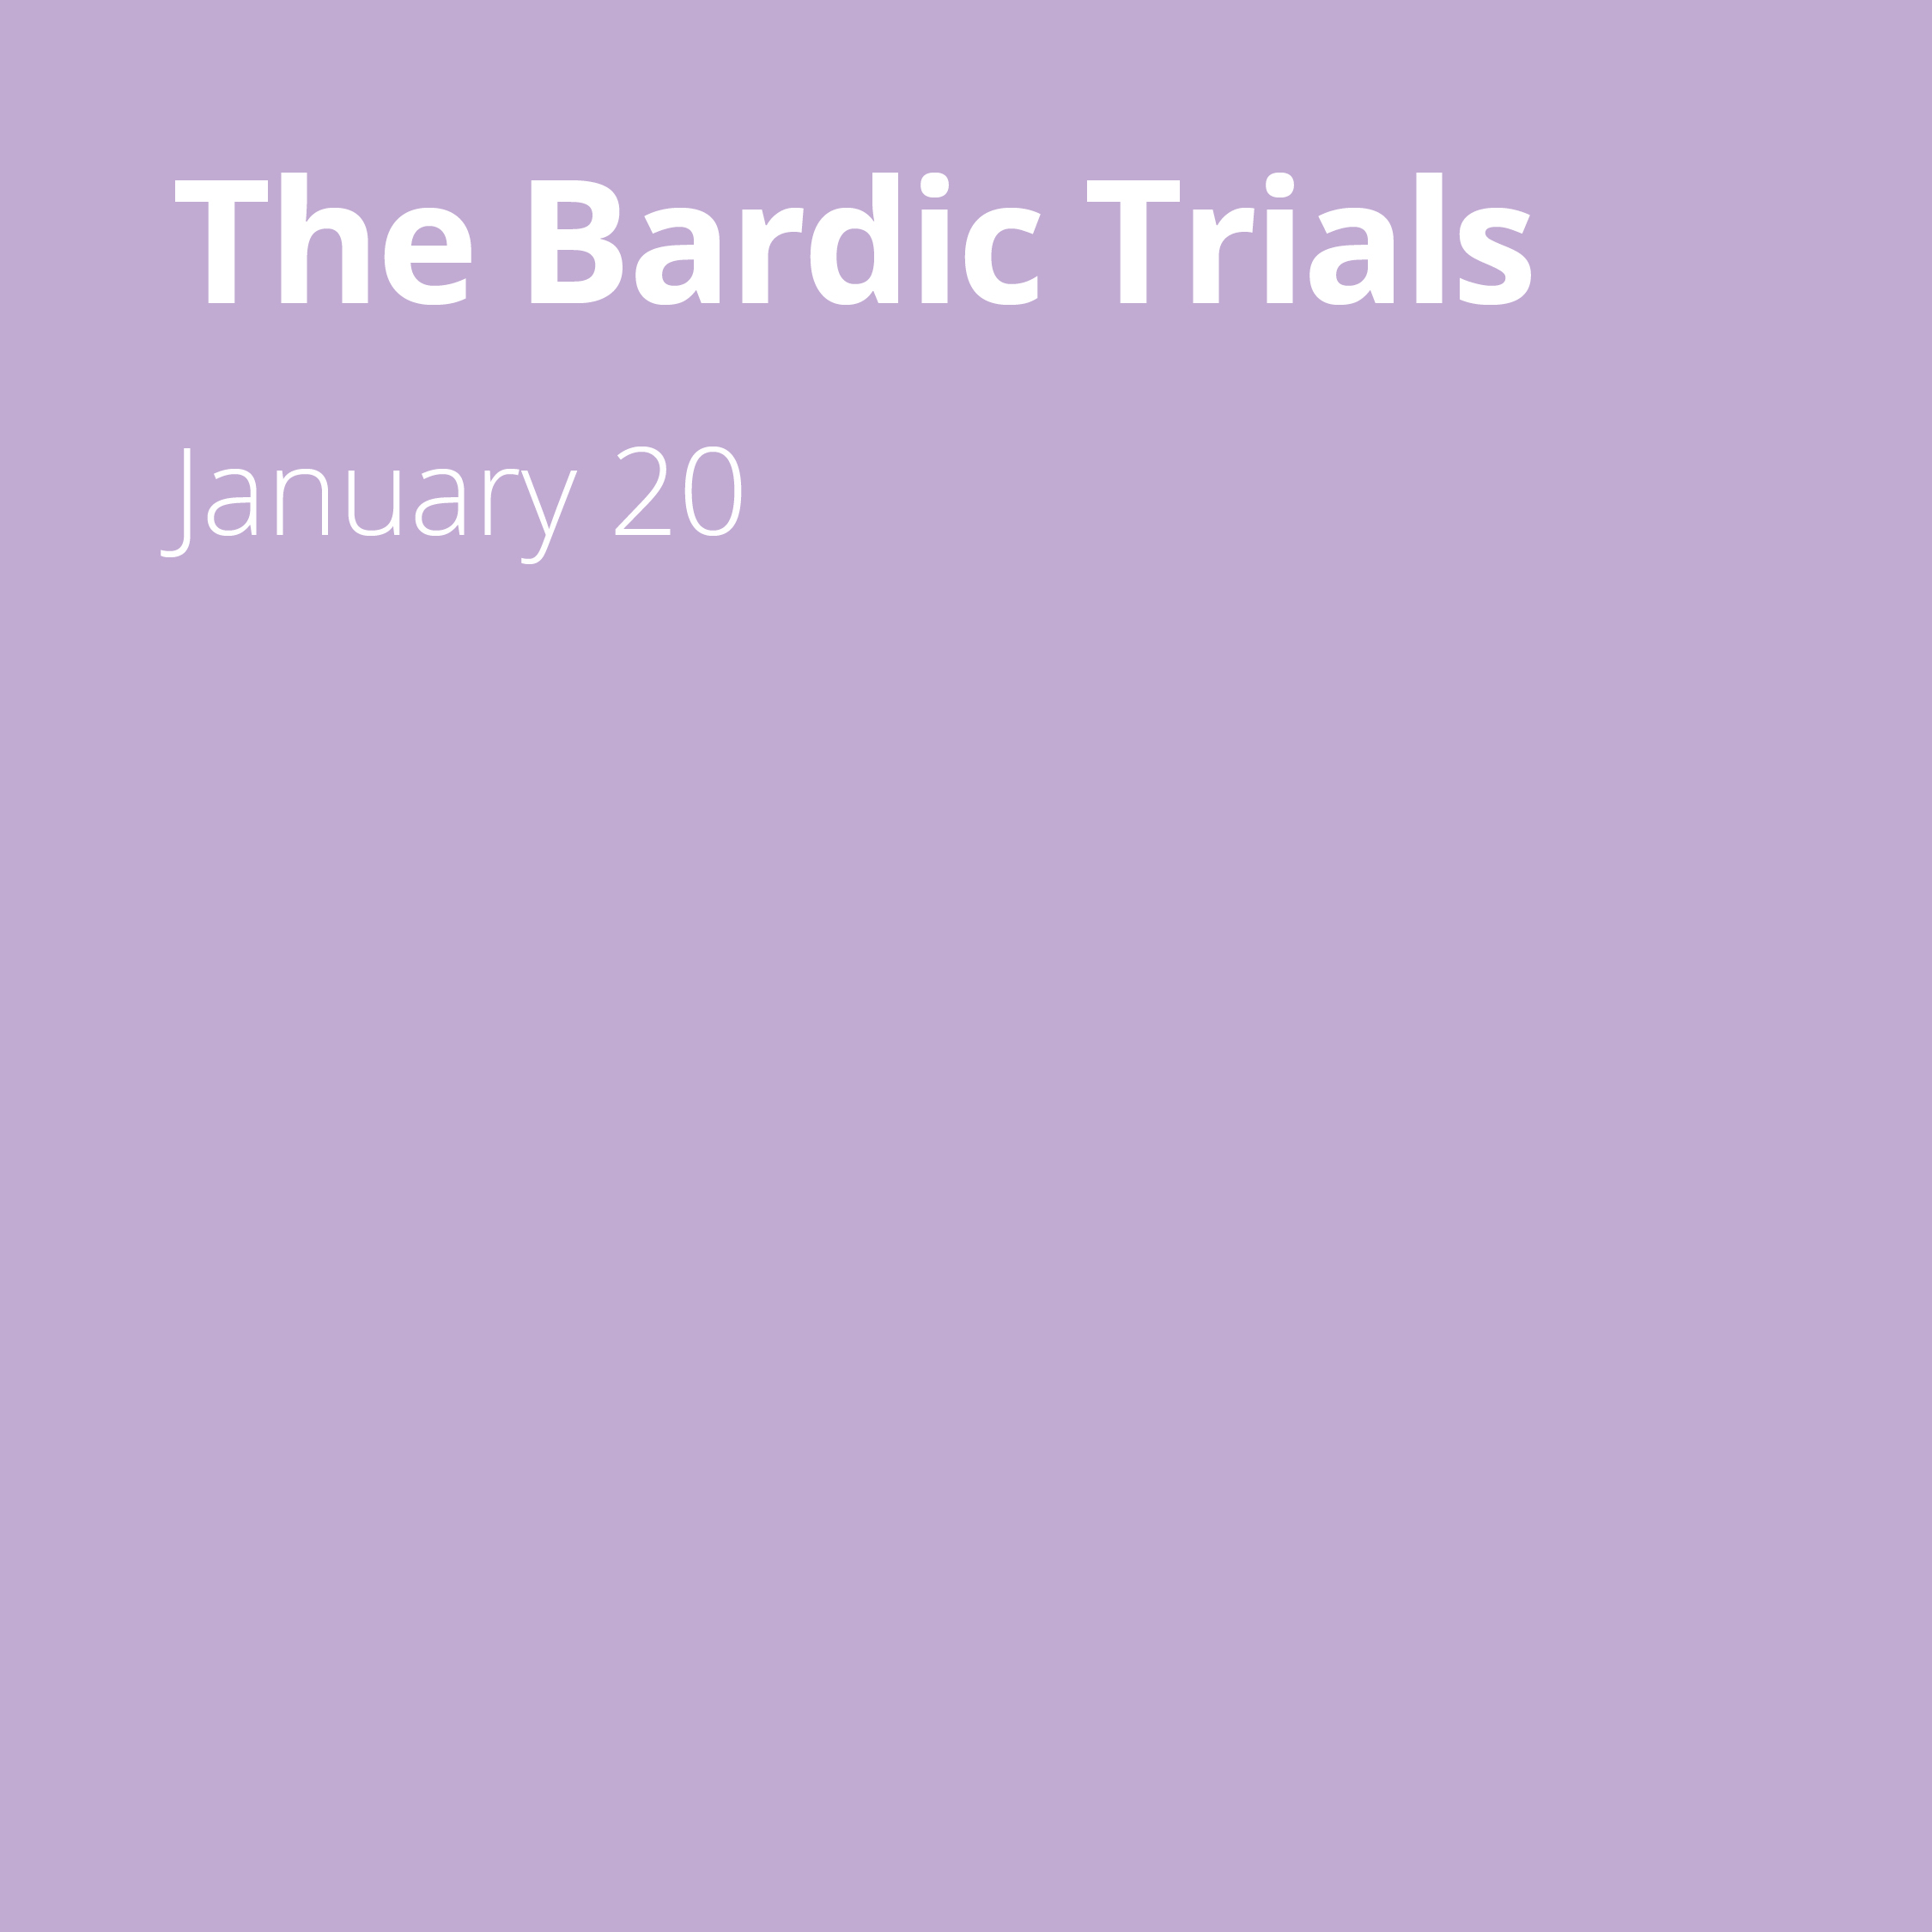 The Bardic Trials